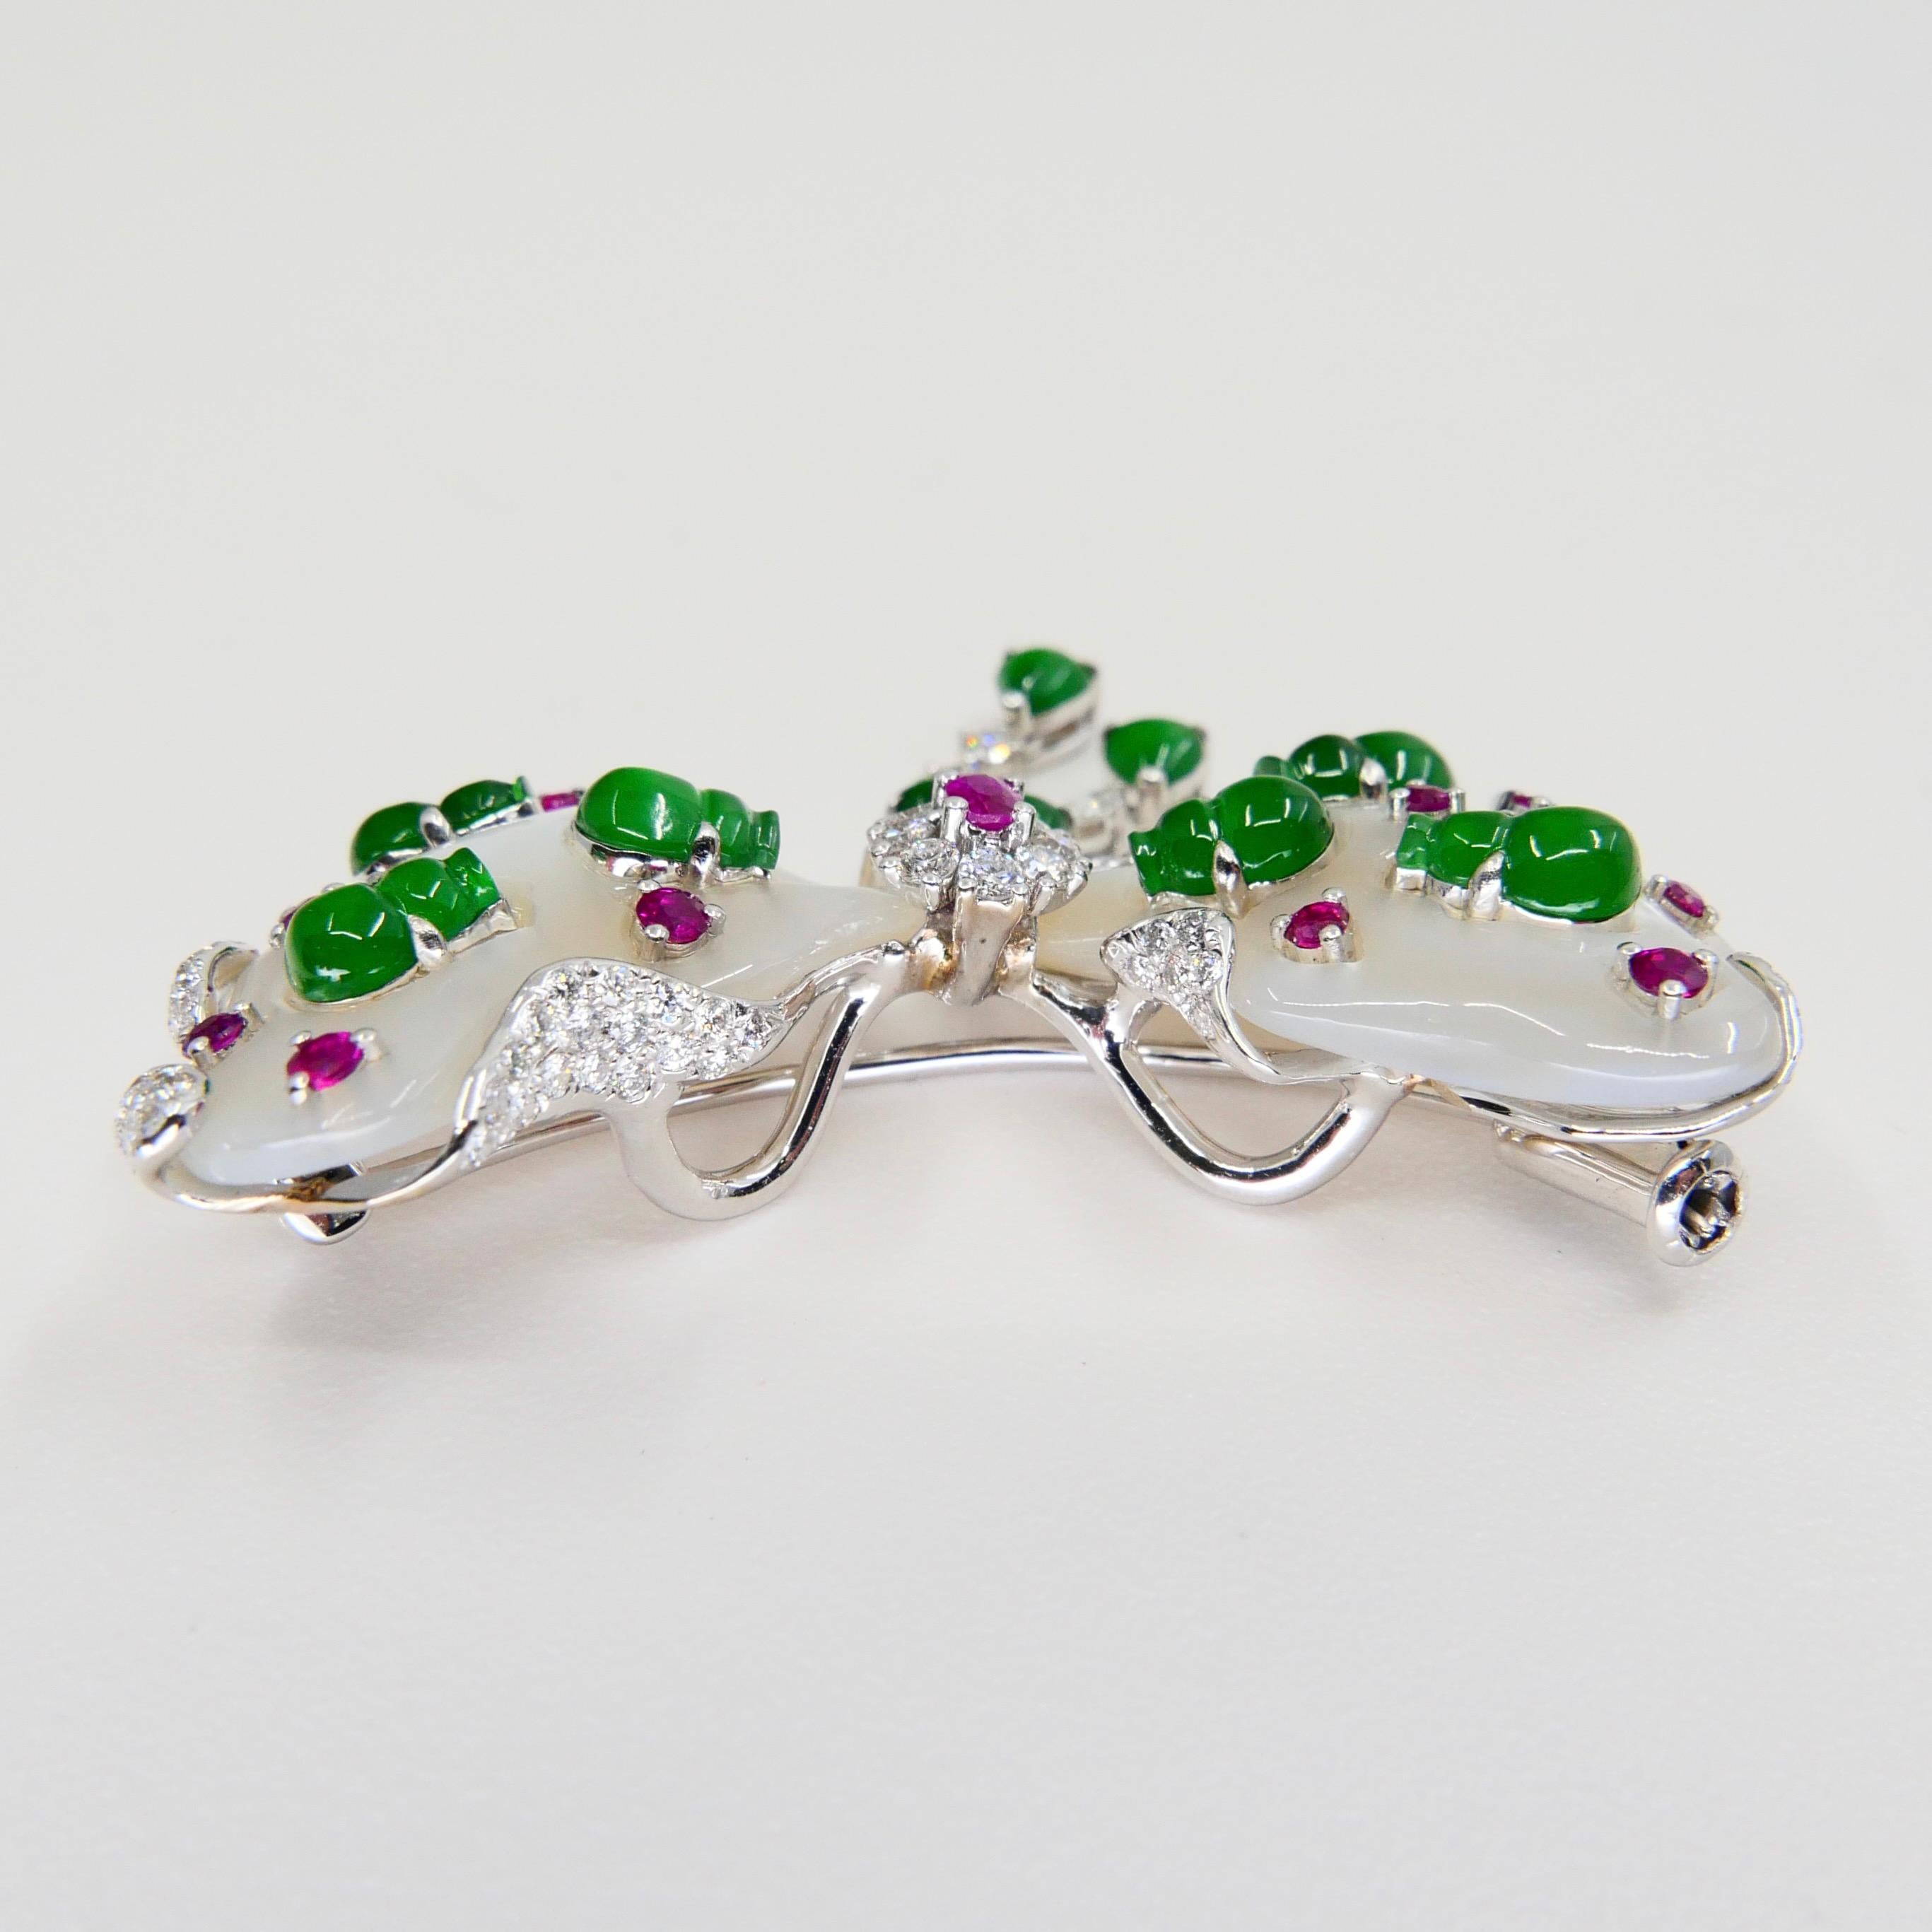 Certified Imperial Green Jadeite Jade Bow, Ruby, Diamond Pendant & Brooch, Glows 10